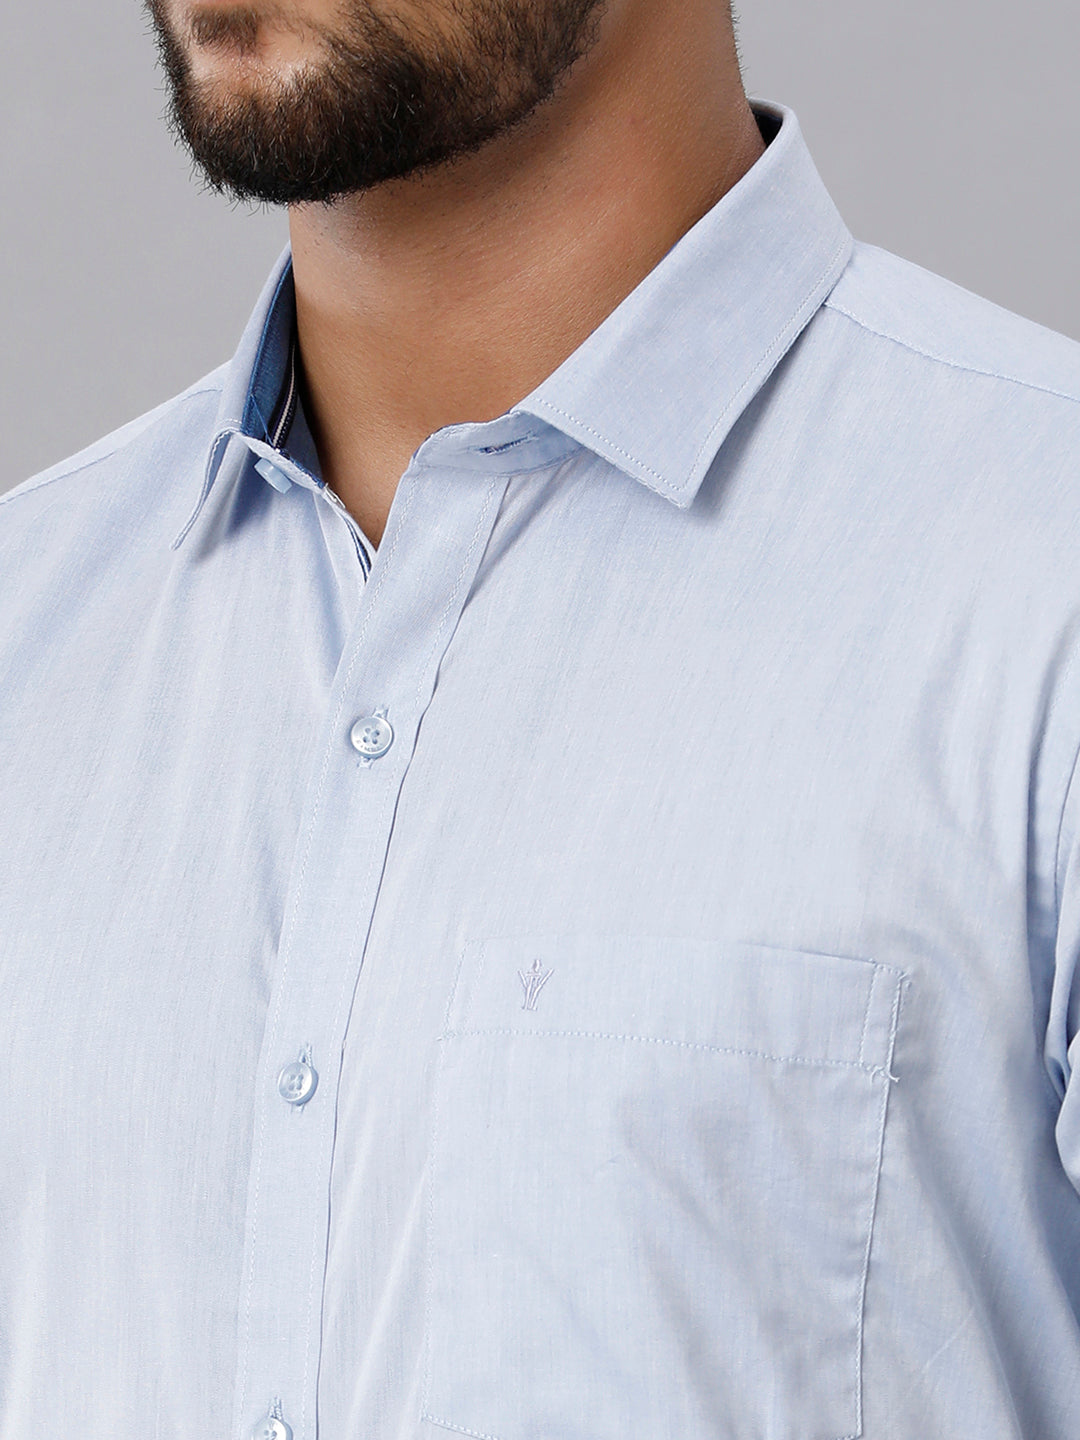 Mens Premium Cotton Formal Shirt Half Sleeves Blue MH G119-Zoom view